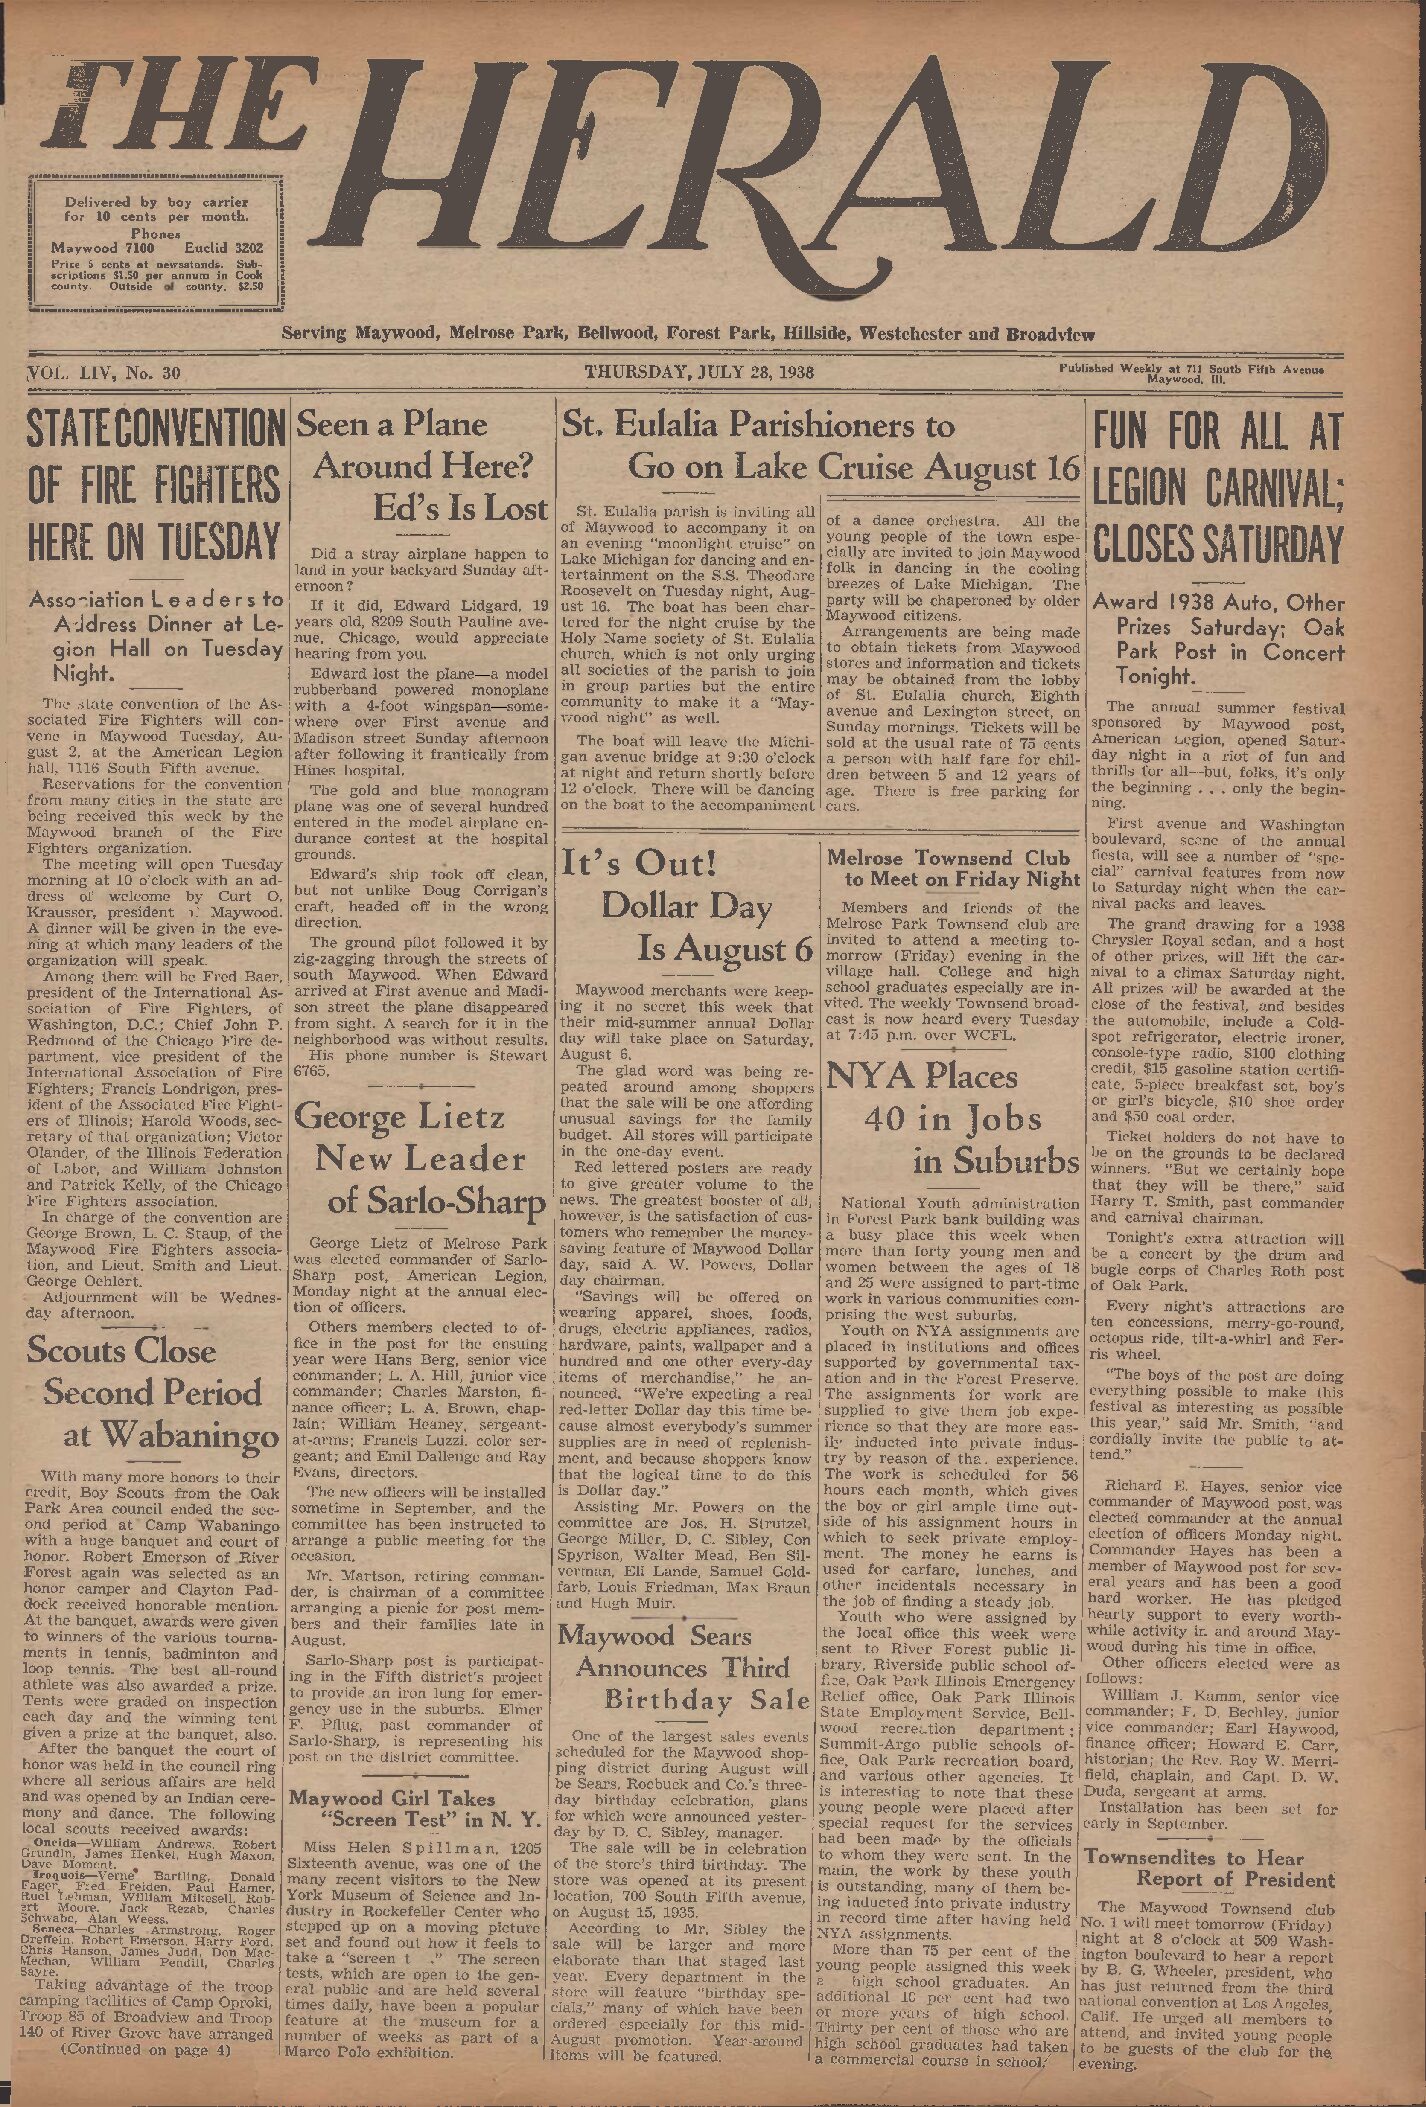 The Herald – 19380728